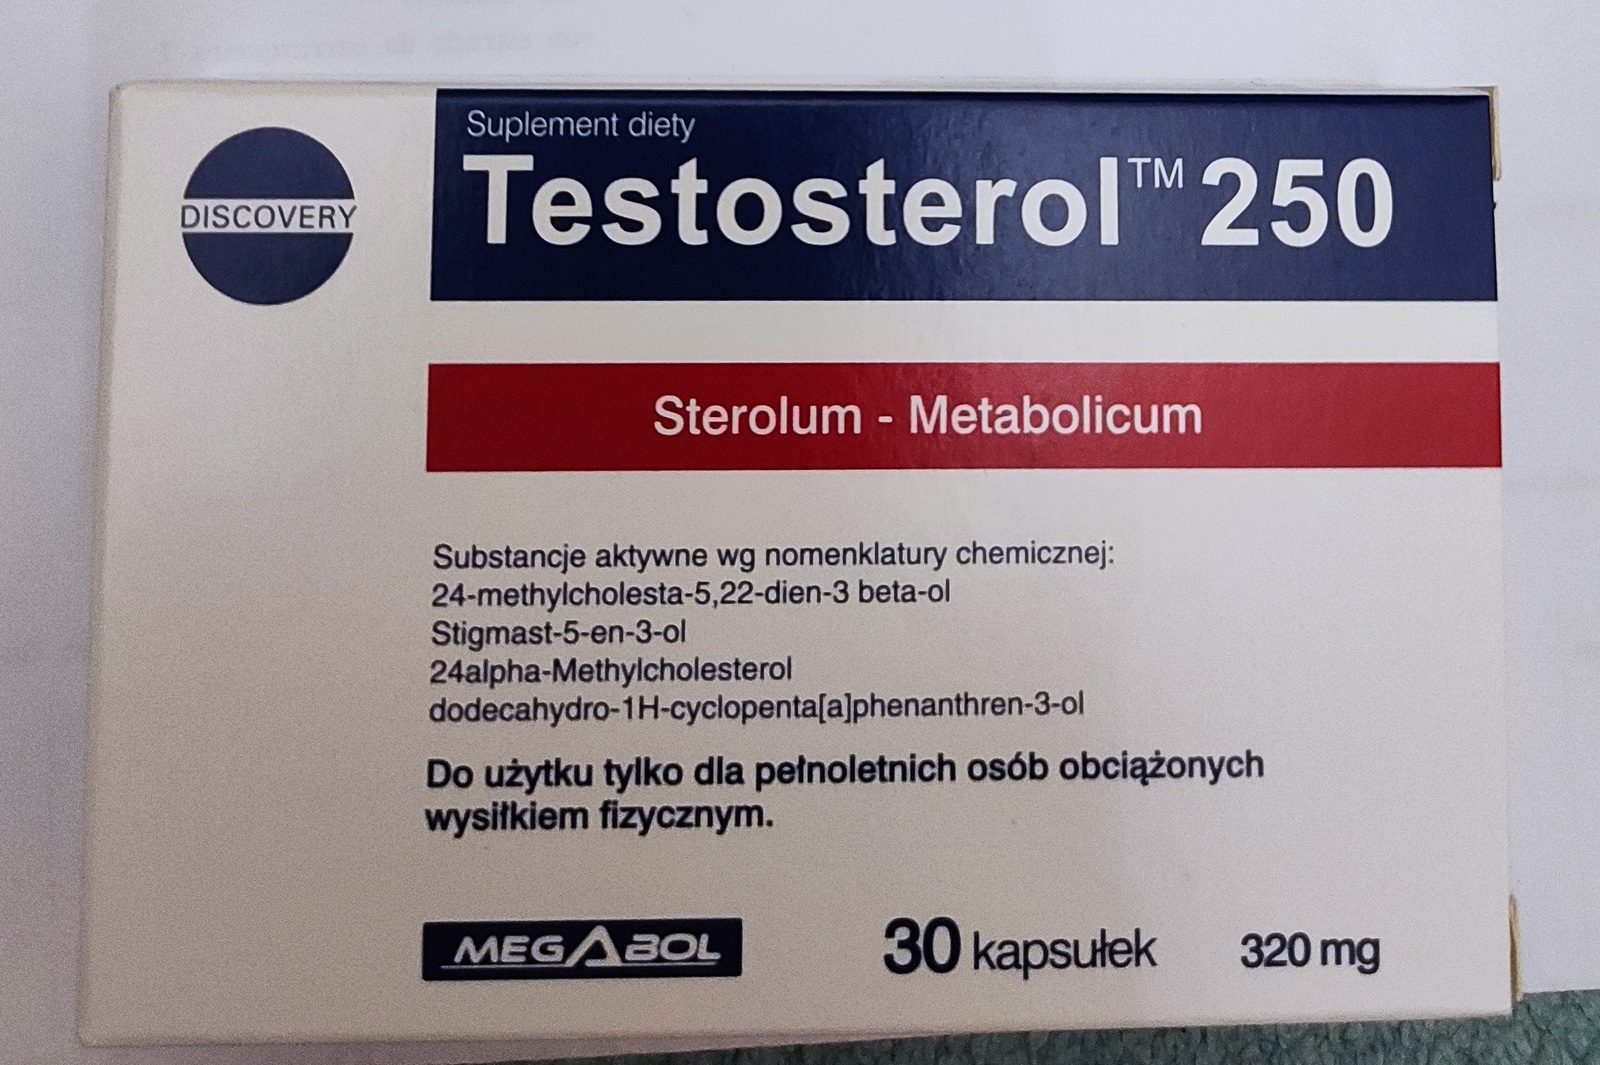 Megabol Testosterol 250 - 2 Pack - 60 cap